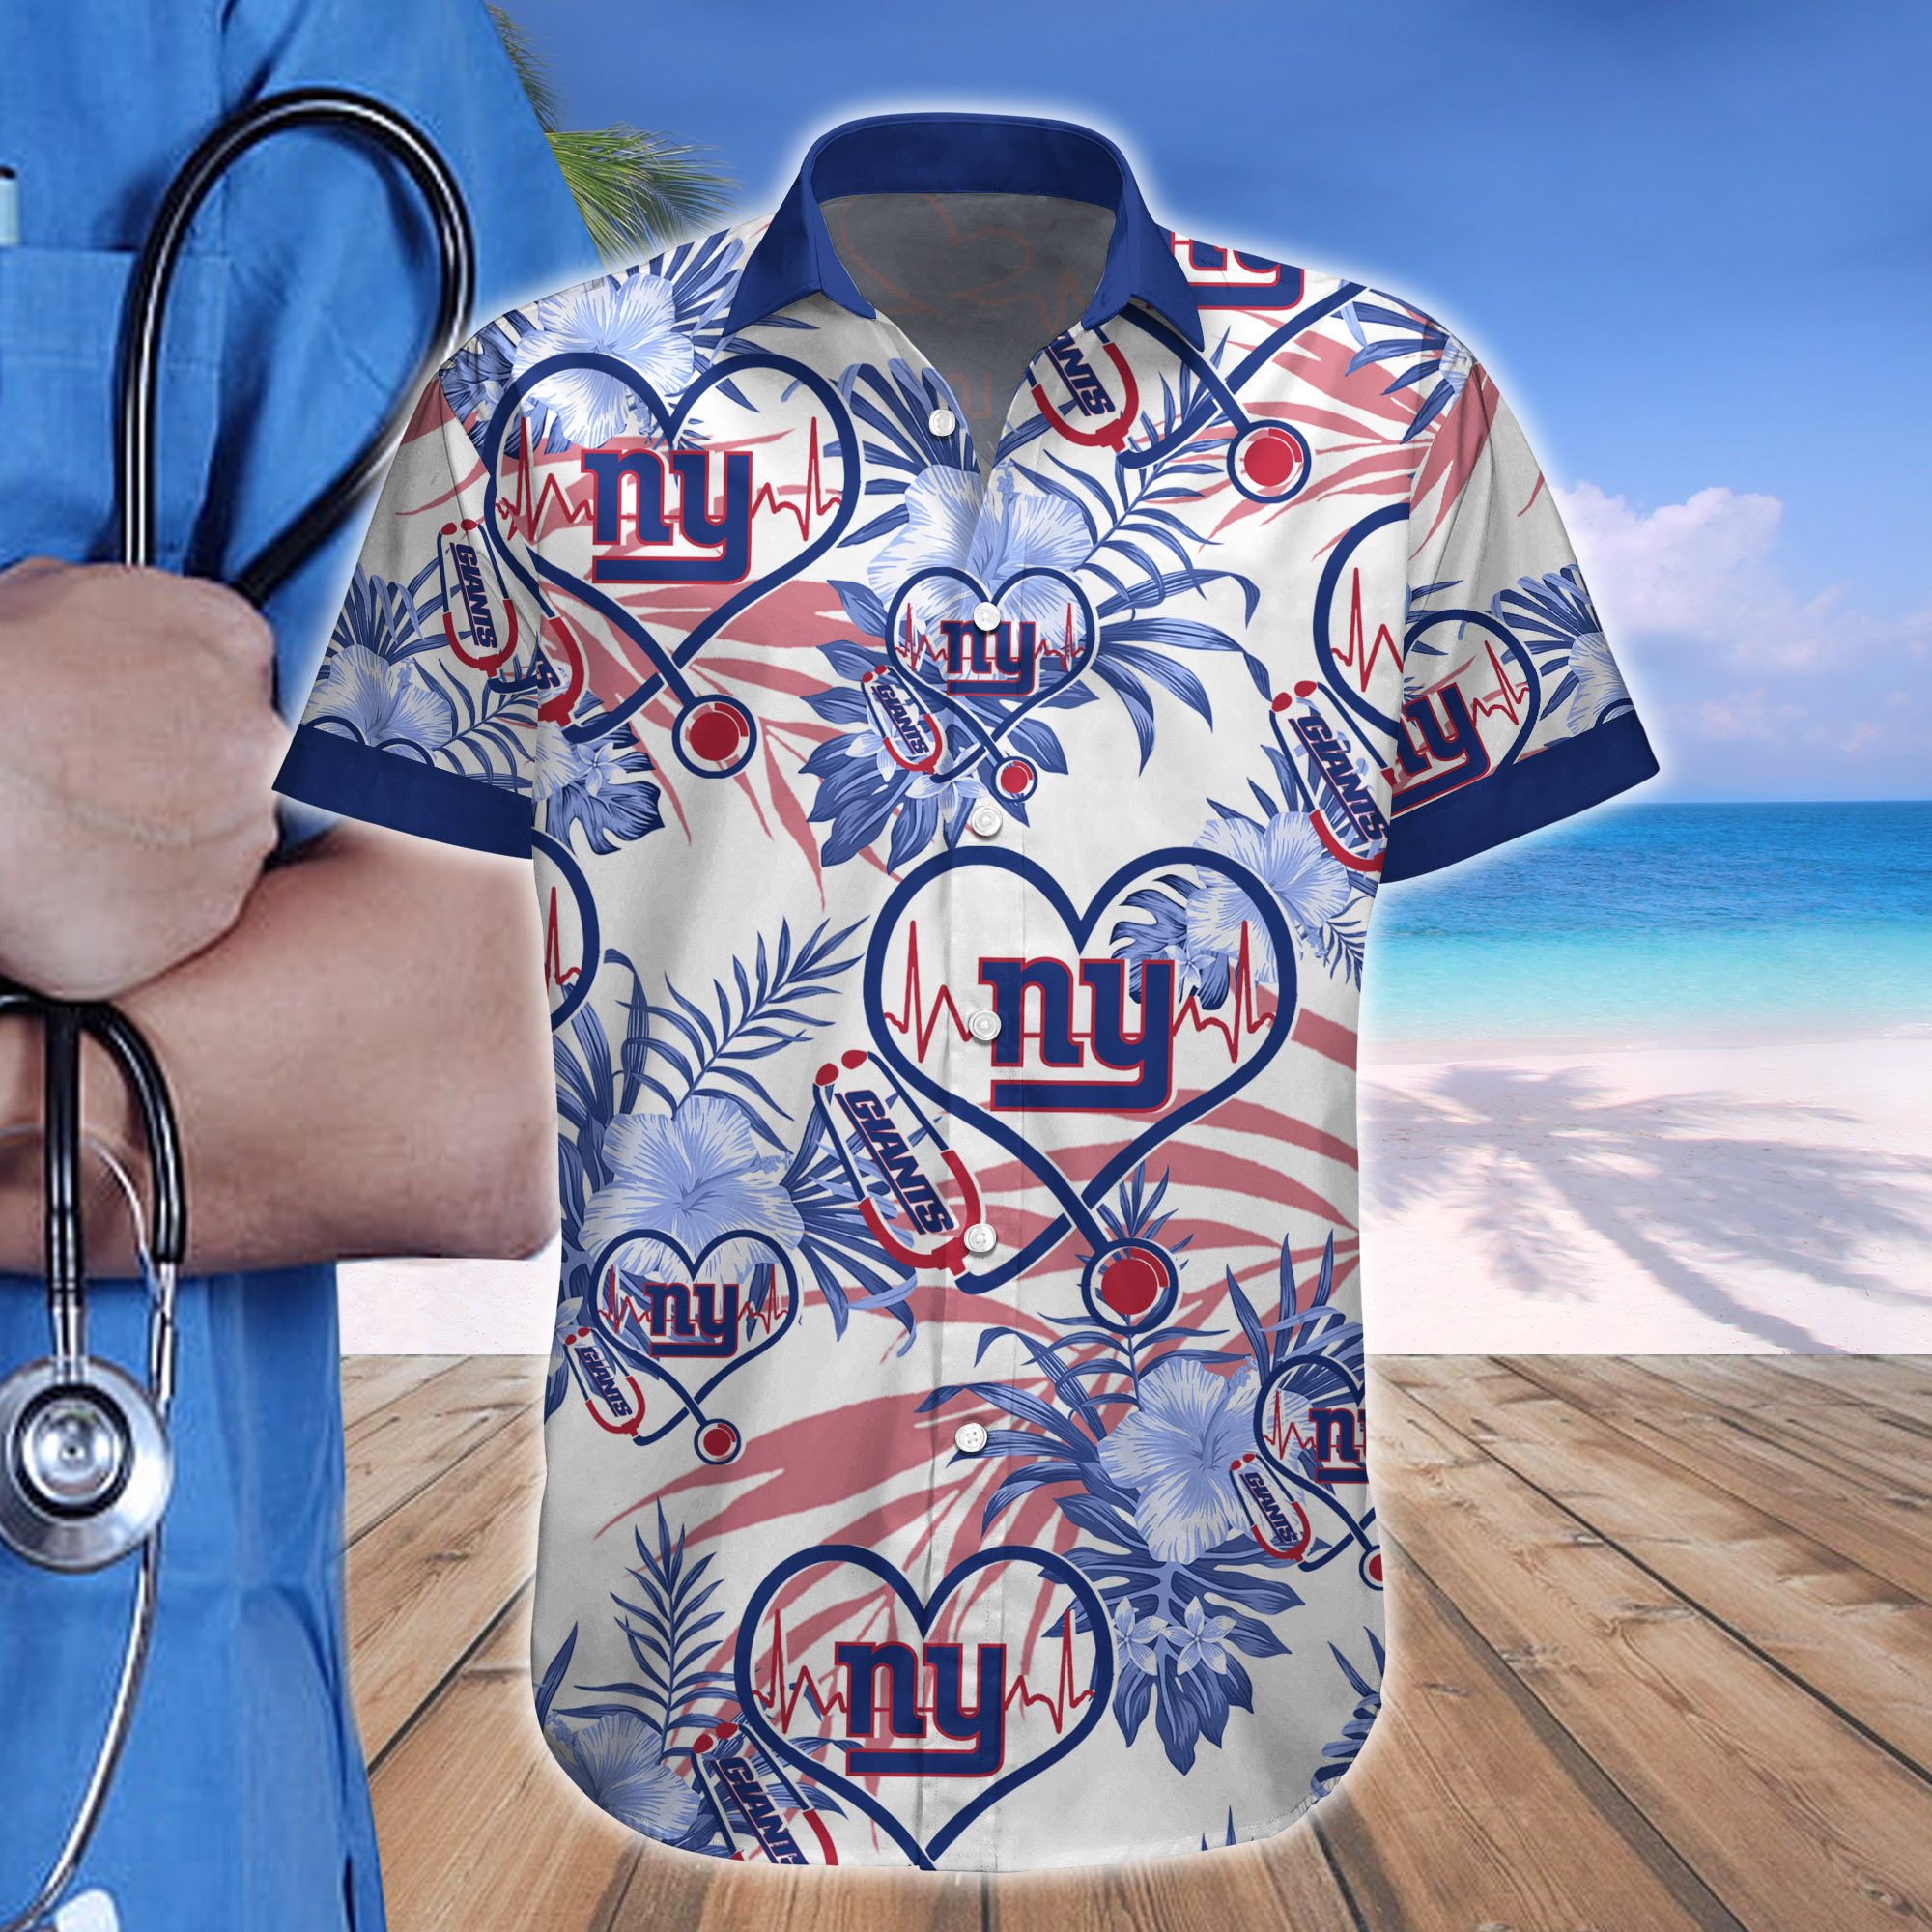 Nurse Love New York Giants Hawaiian shirt